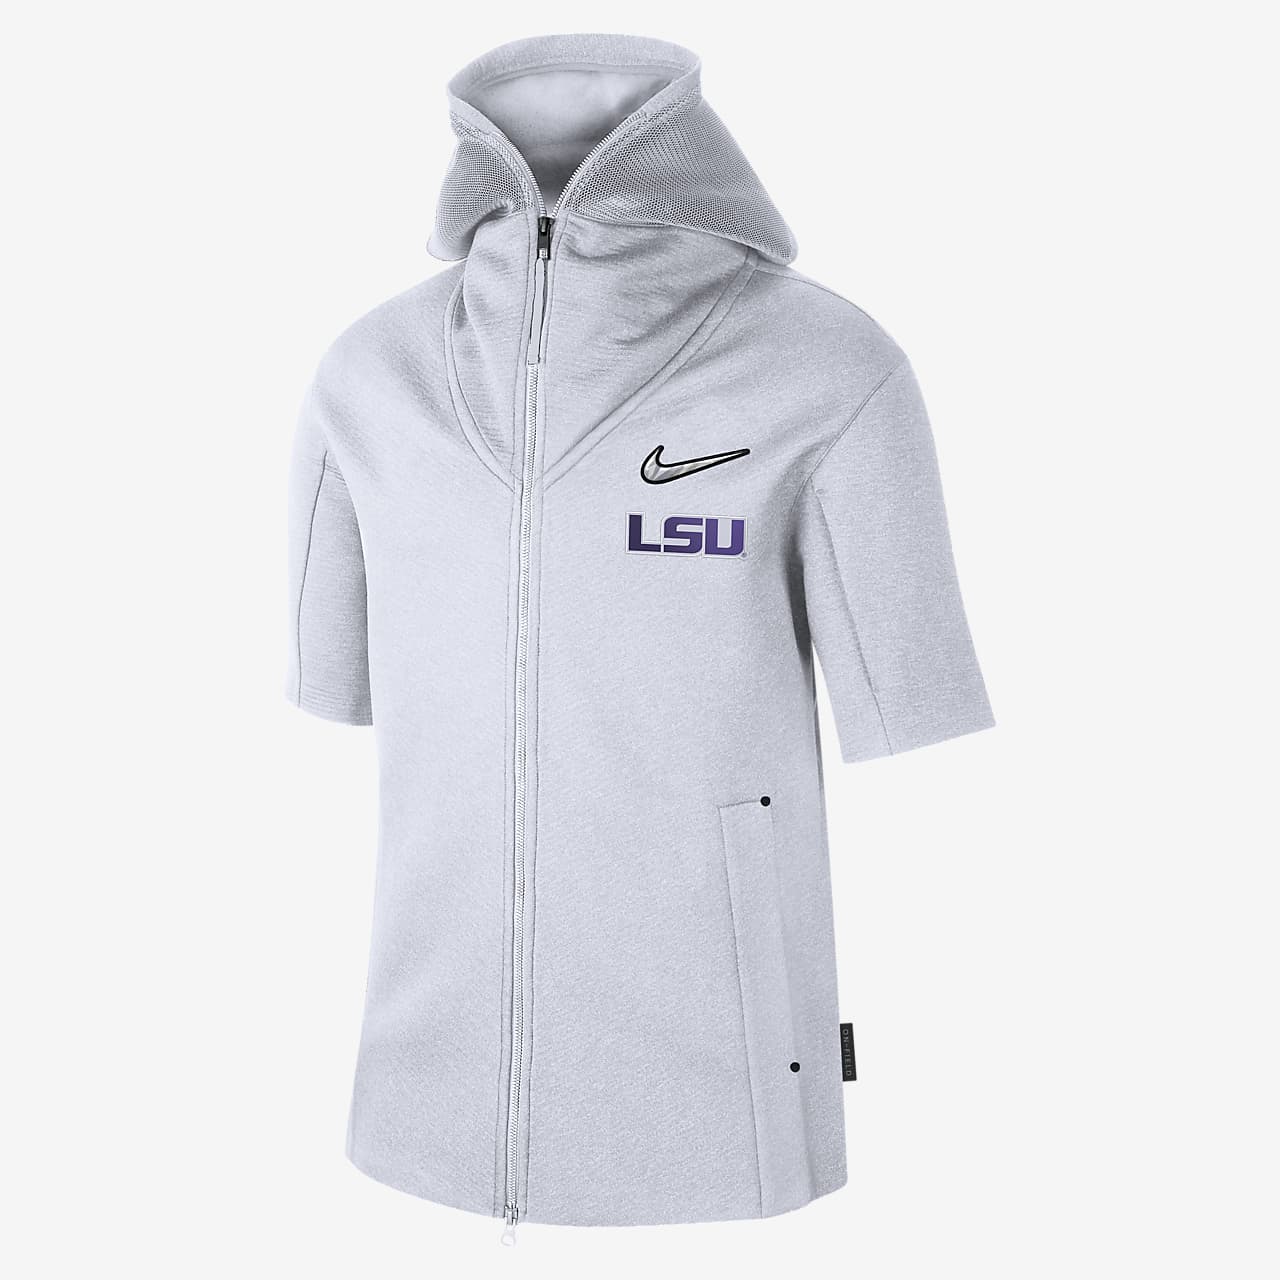 Sudadera con capucha de manga corta para Nike (LSU). Nike.com